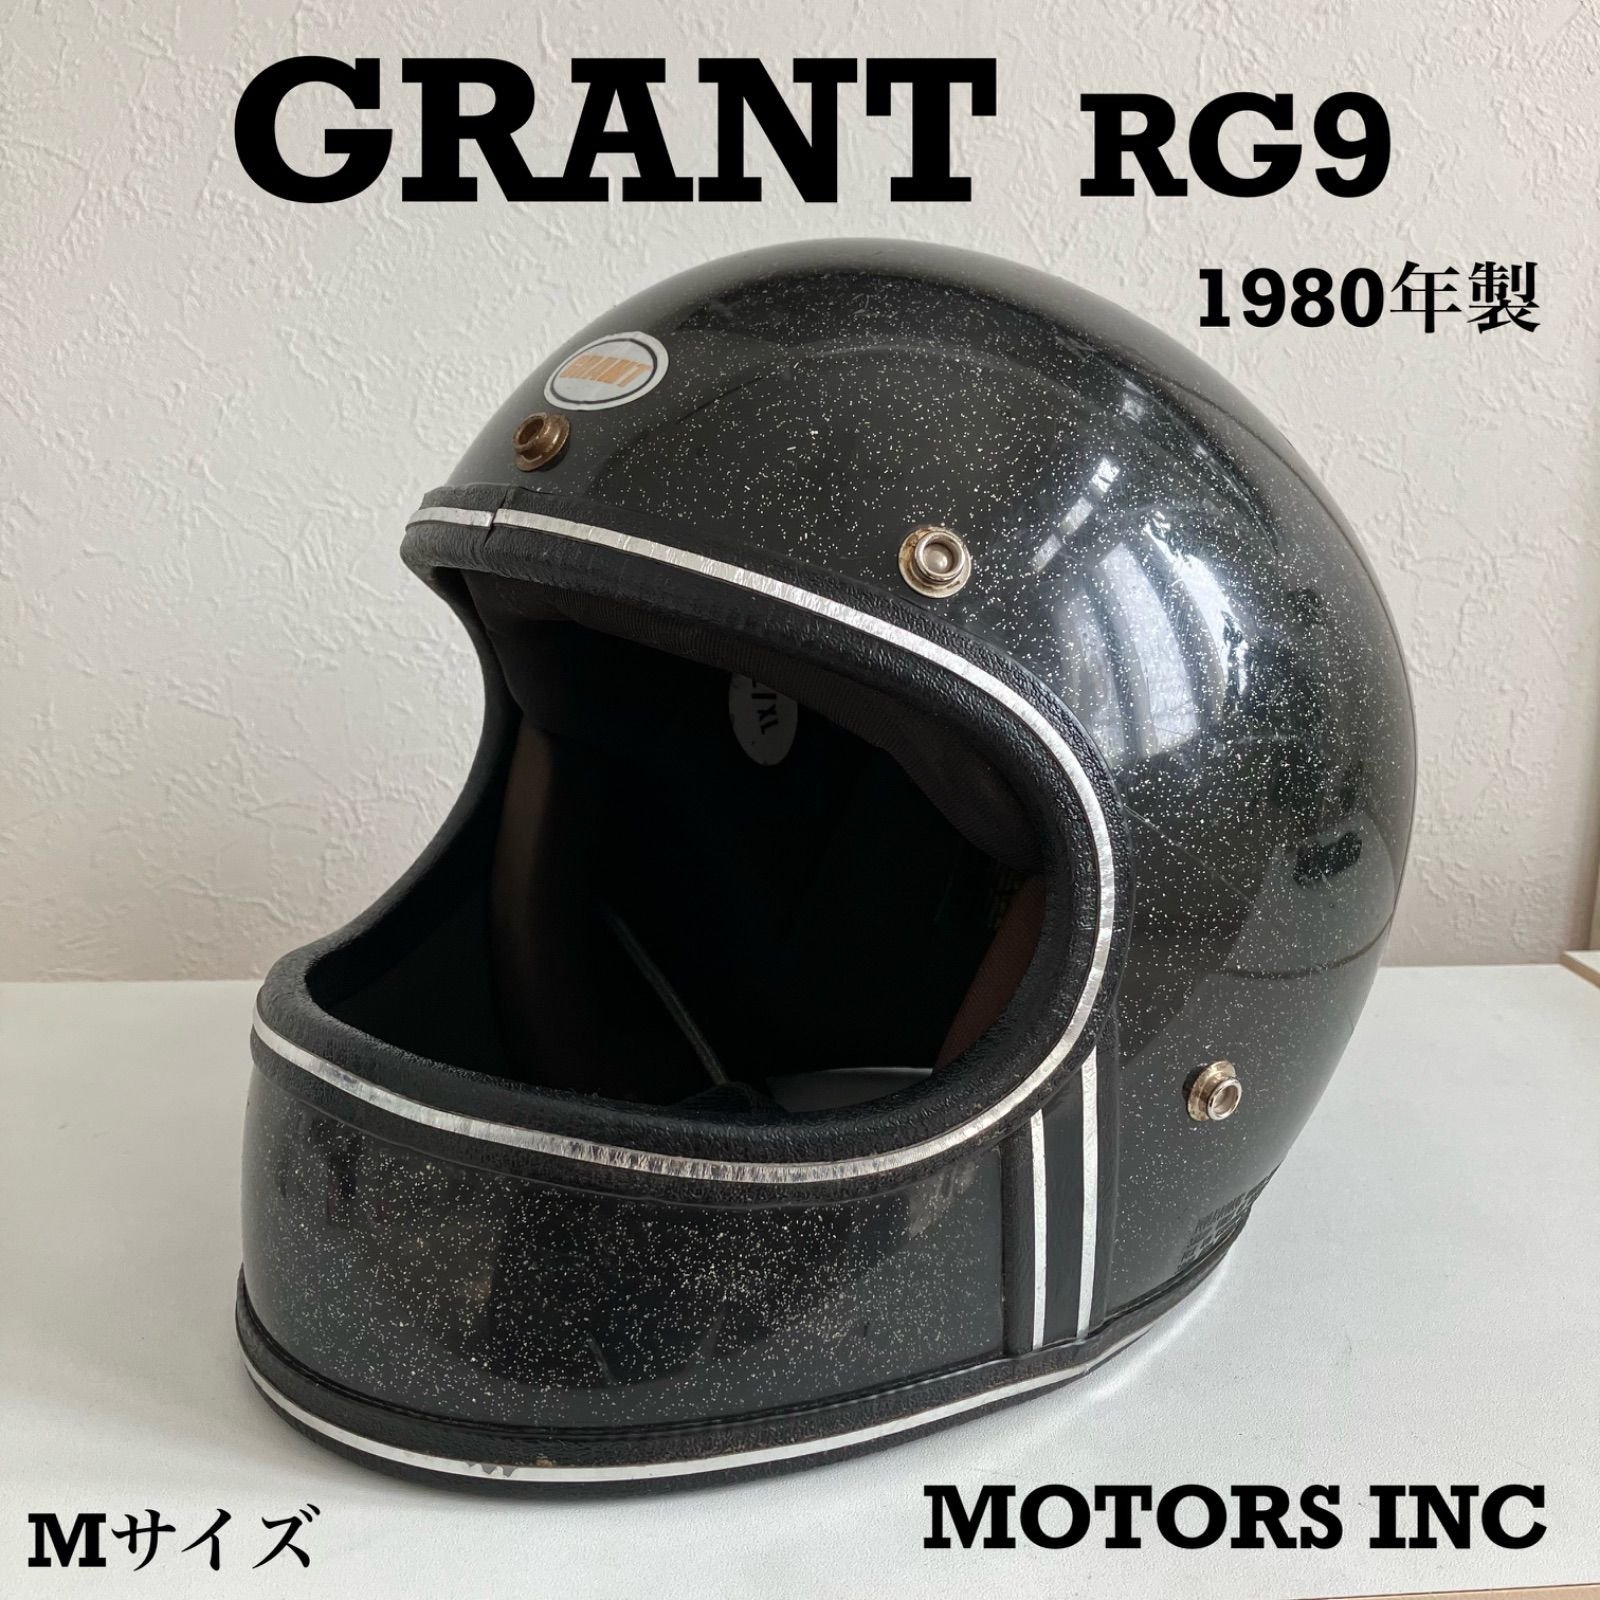 GRANT RG-9☆Mサイズ ビンテージヘルメット 80年代 黒 希少 旧車 